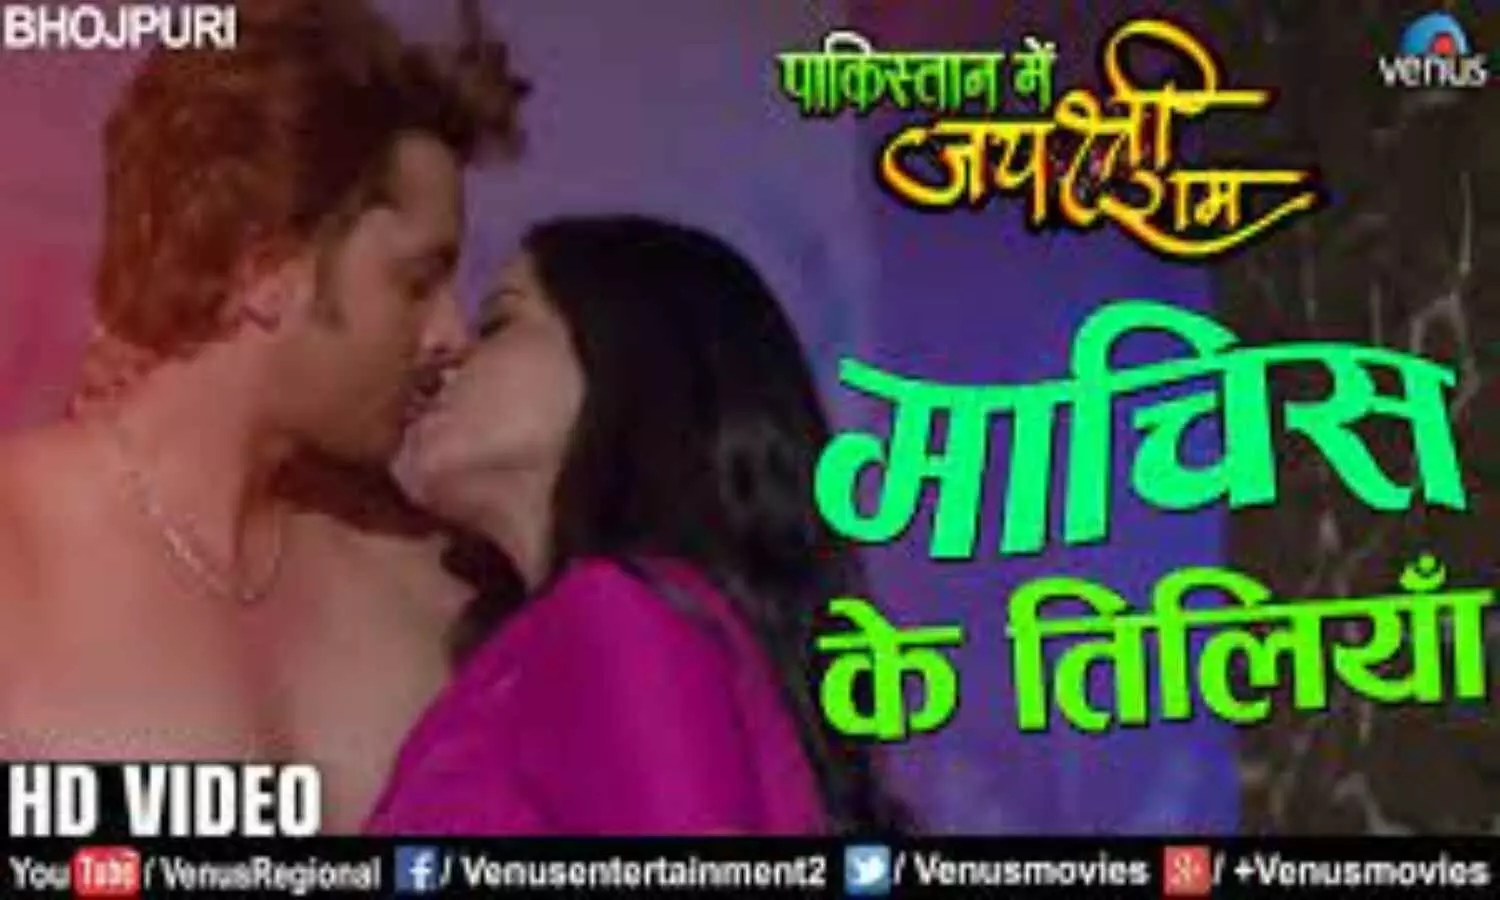 bhojpuri song machis ke tiliya featuring monalisa goes viral watch actress  sexy look bhojpuri news in hindi samachar | Bhojpuri Video: साड़ी में  मोनालिसा ने दिए सेक्सी मूव्स, एक्ट्रेस के बोल्ड लुक